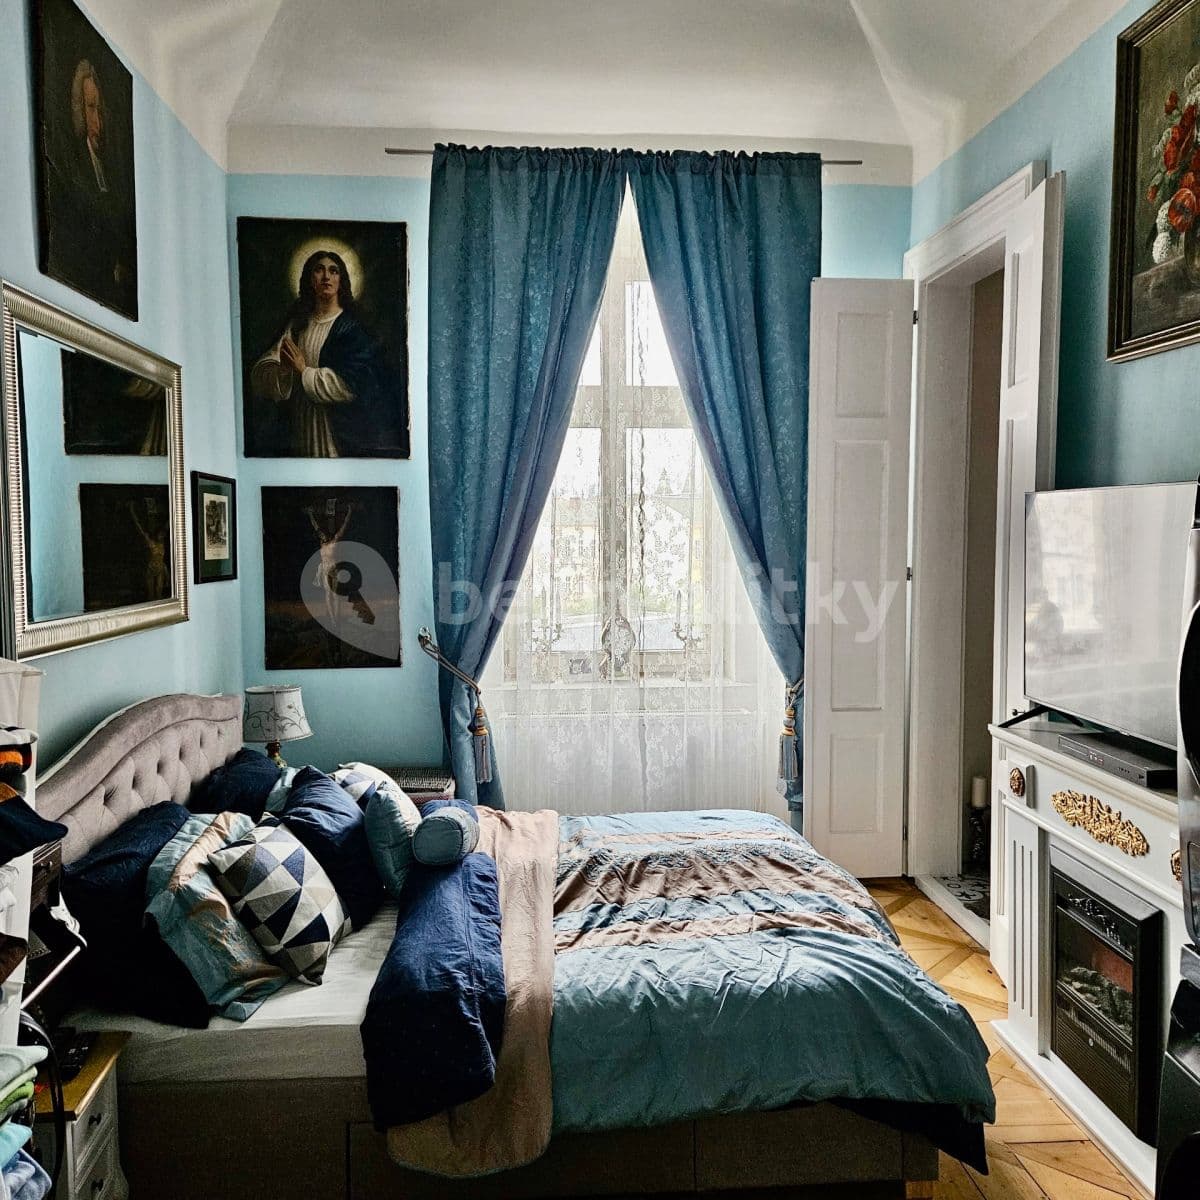 3 bedroom flat for sale, 92 m², Holečkova, Prague, Prague